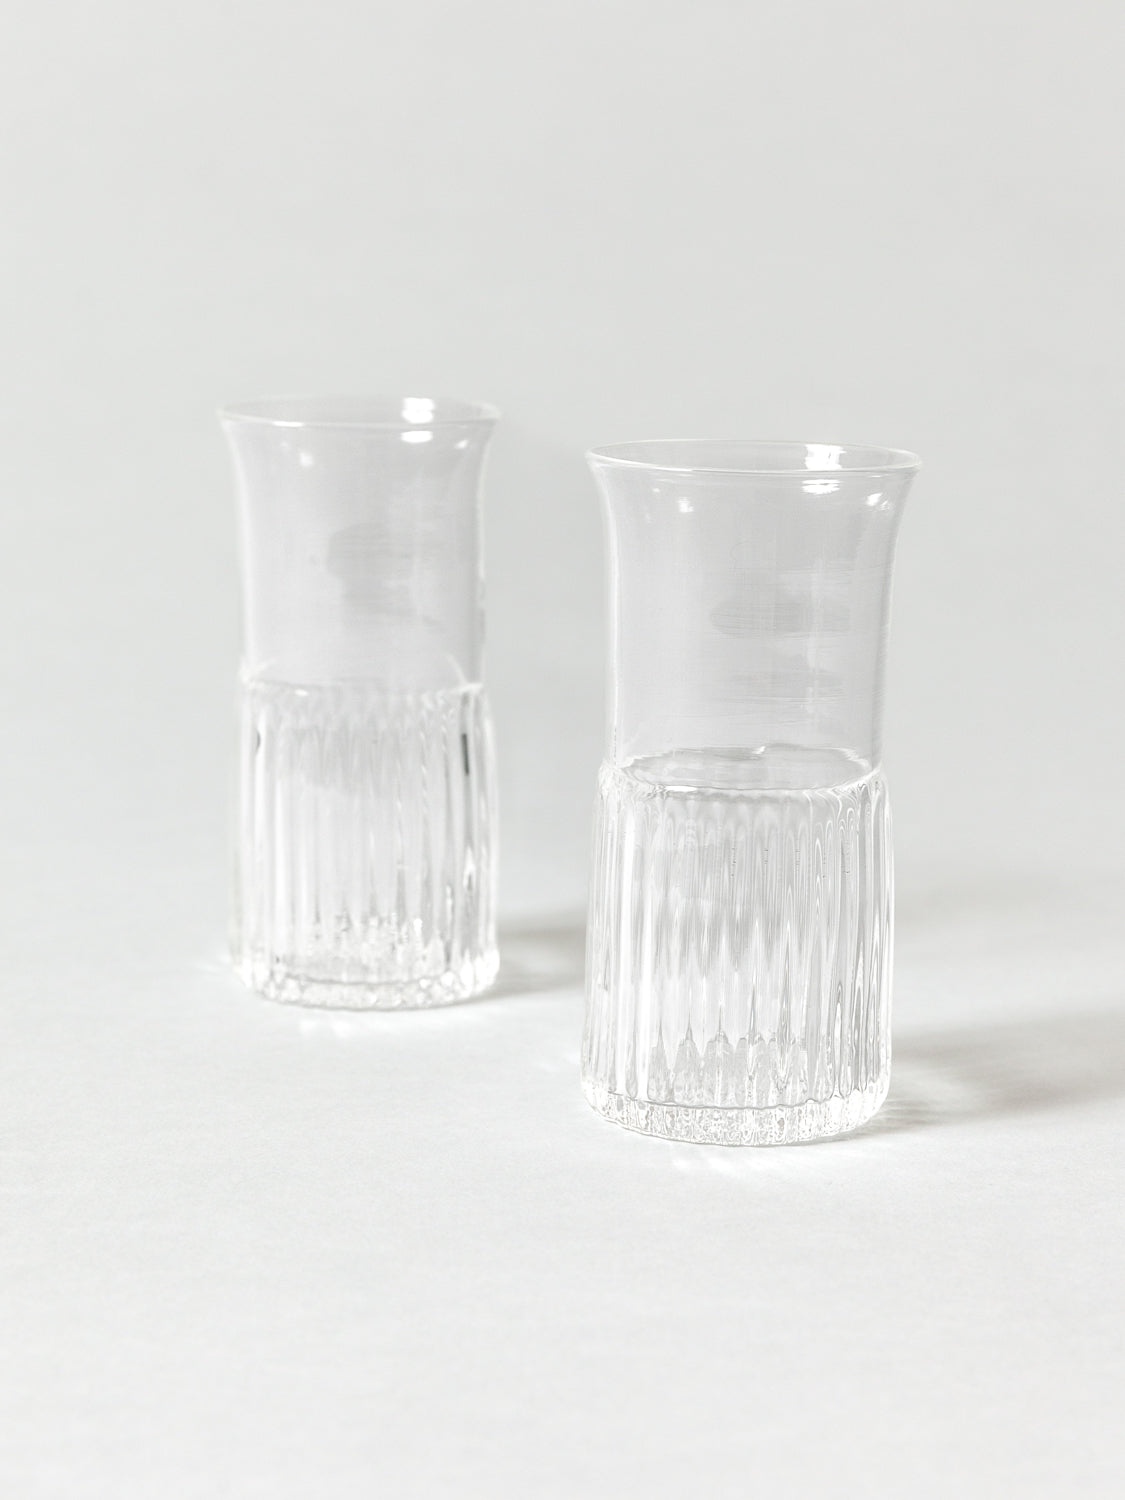 Yamanone Hiramoku Glass